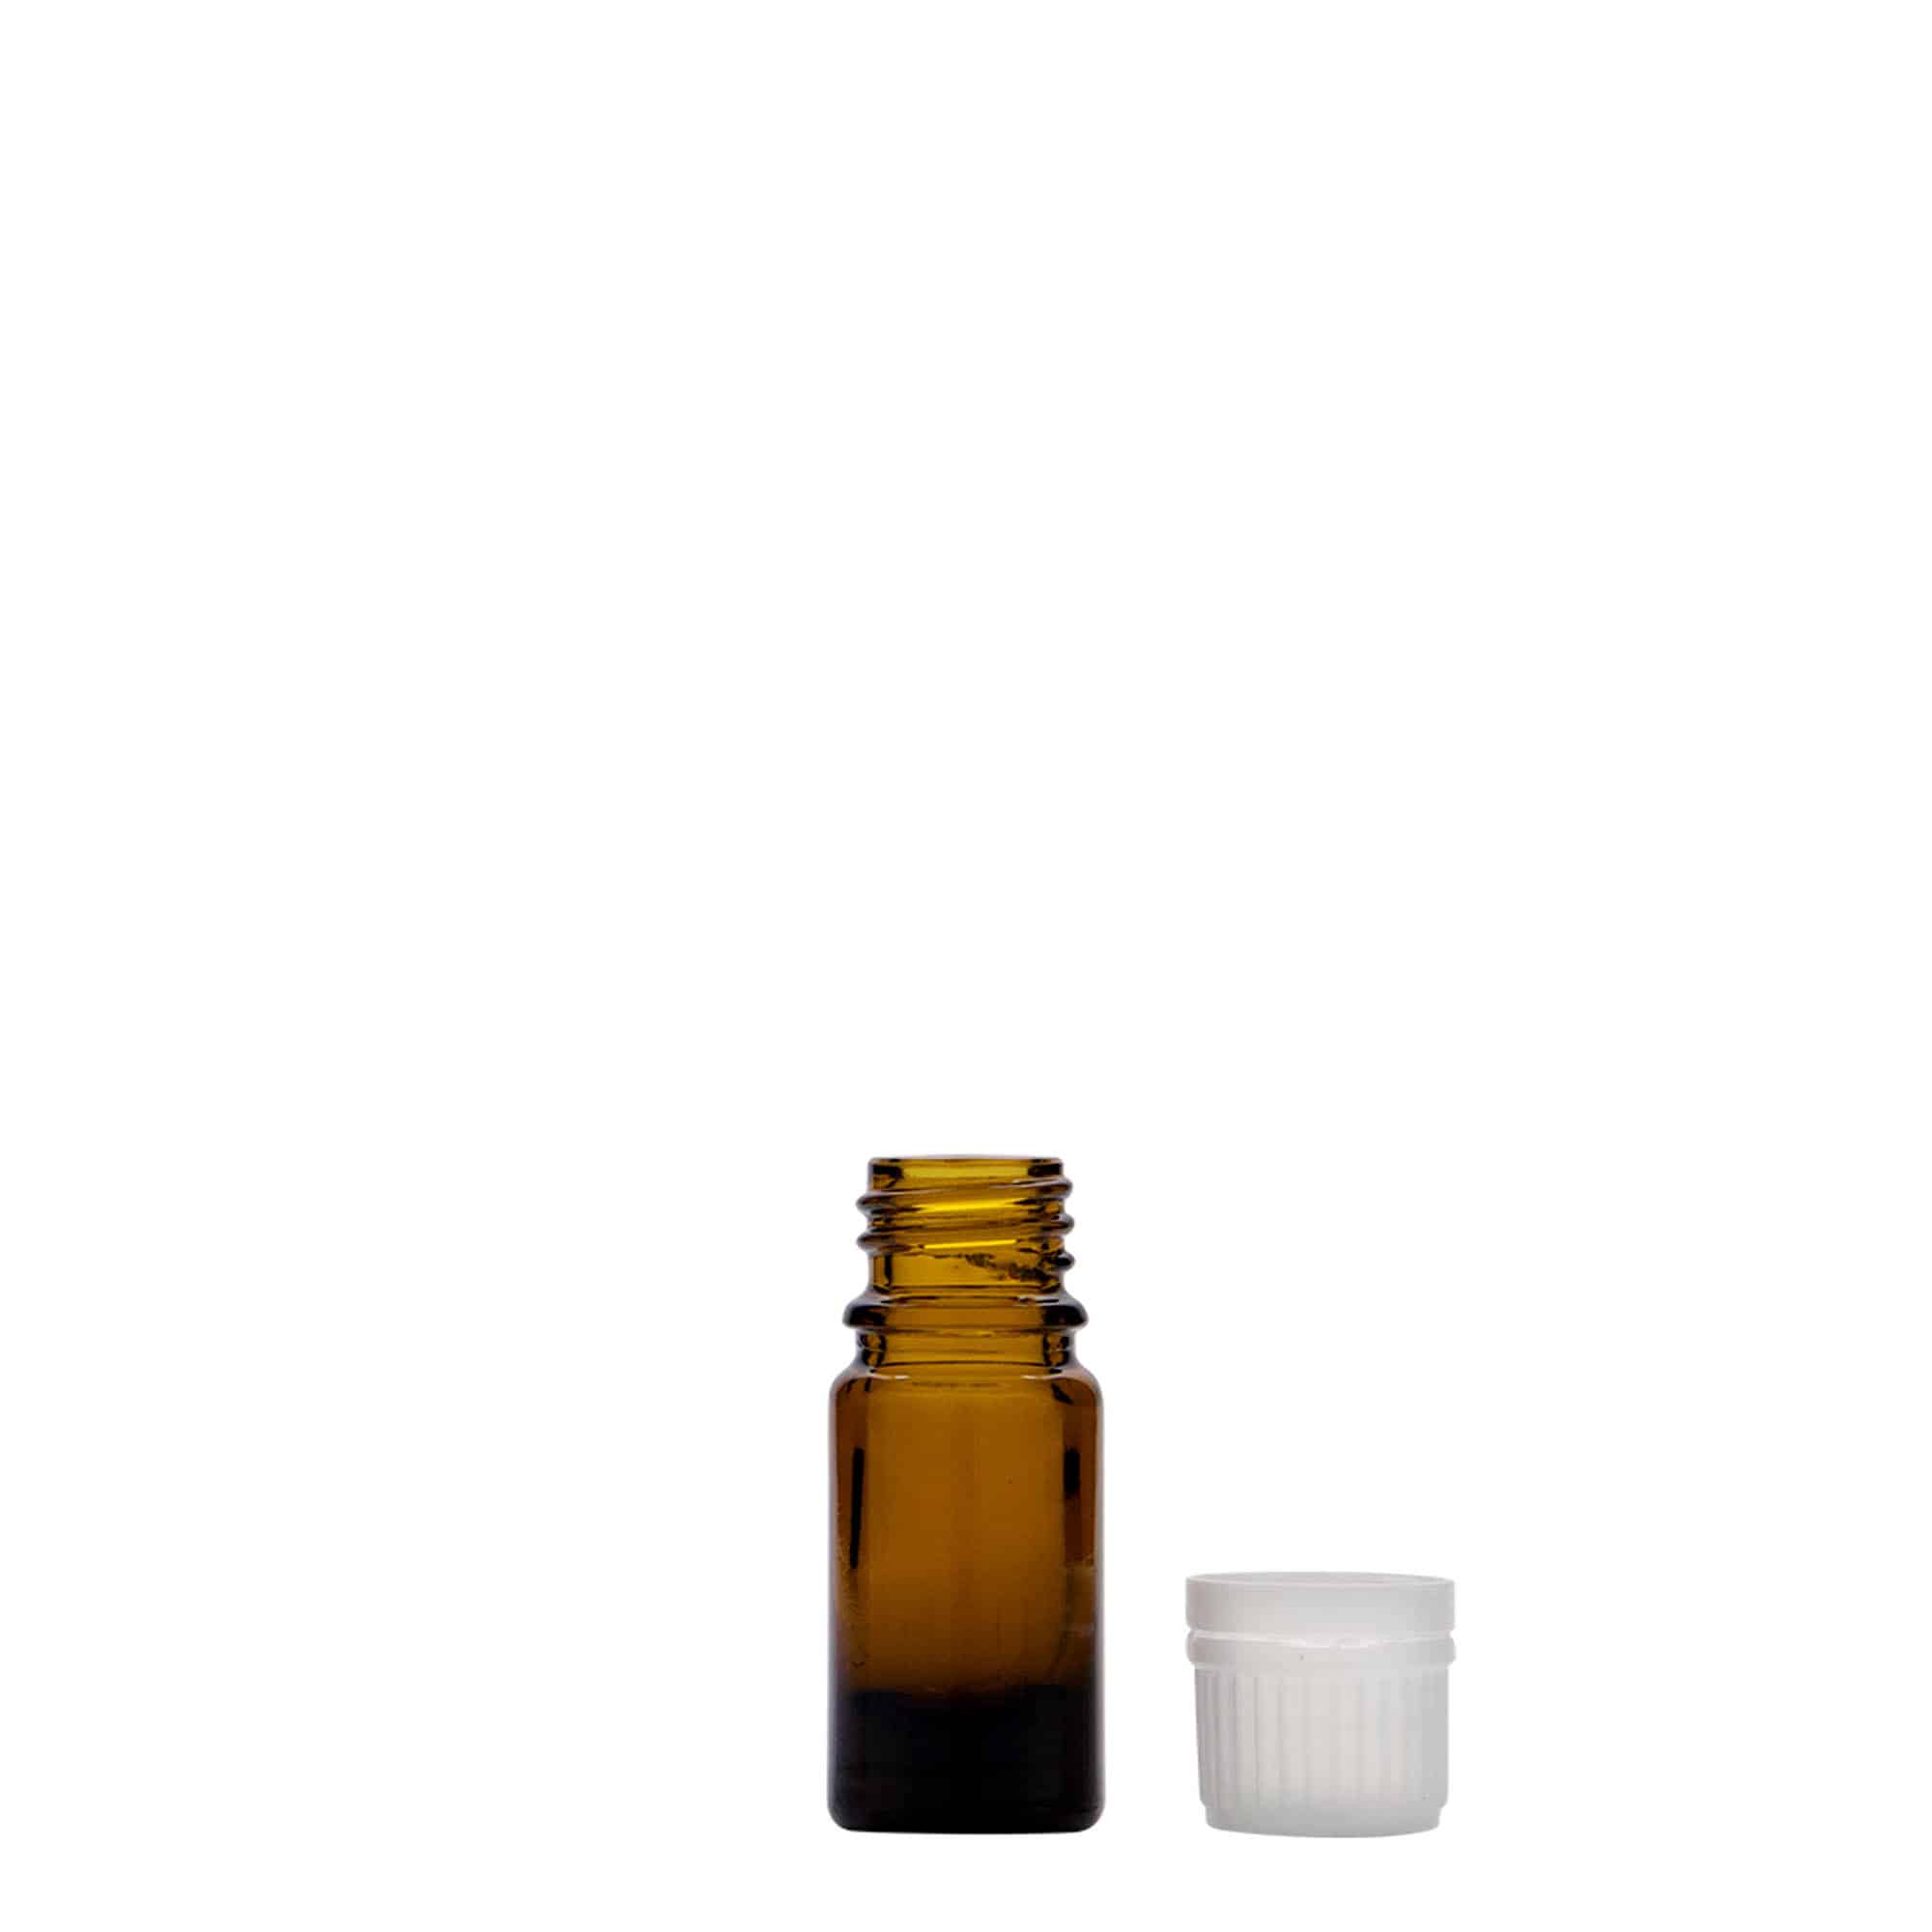 Lékovka 5 ml, sklo, hnědá, ústí: DIN 18